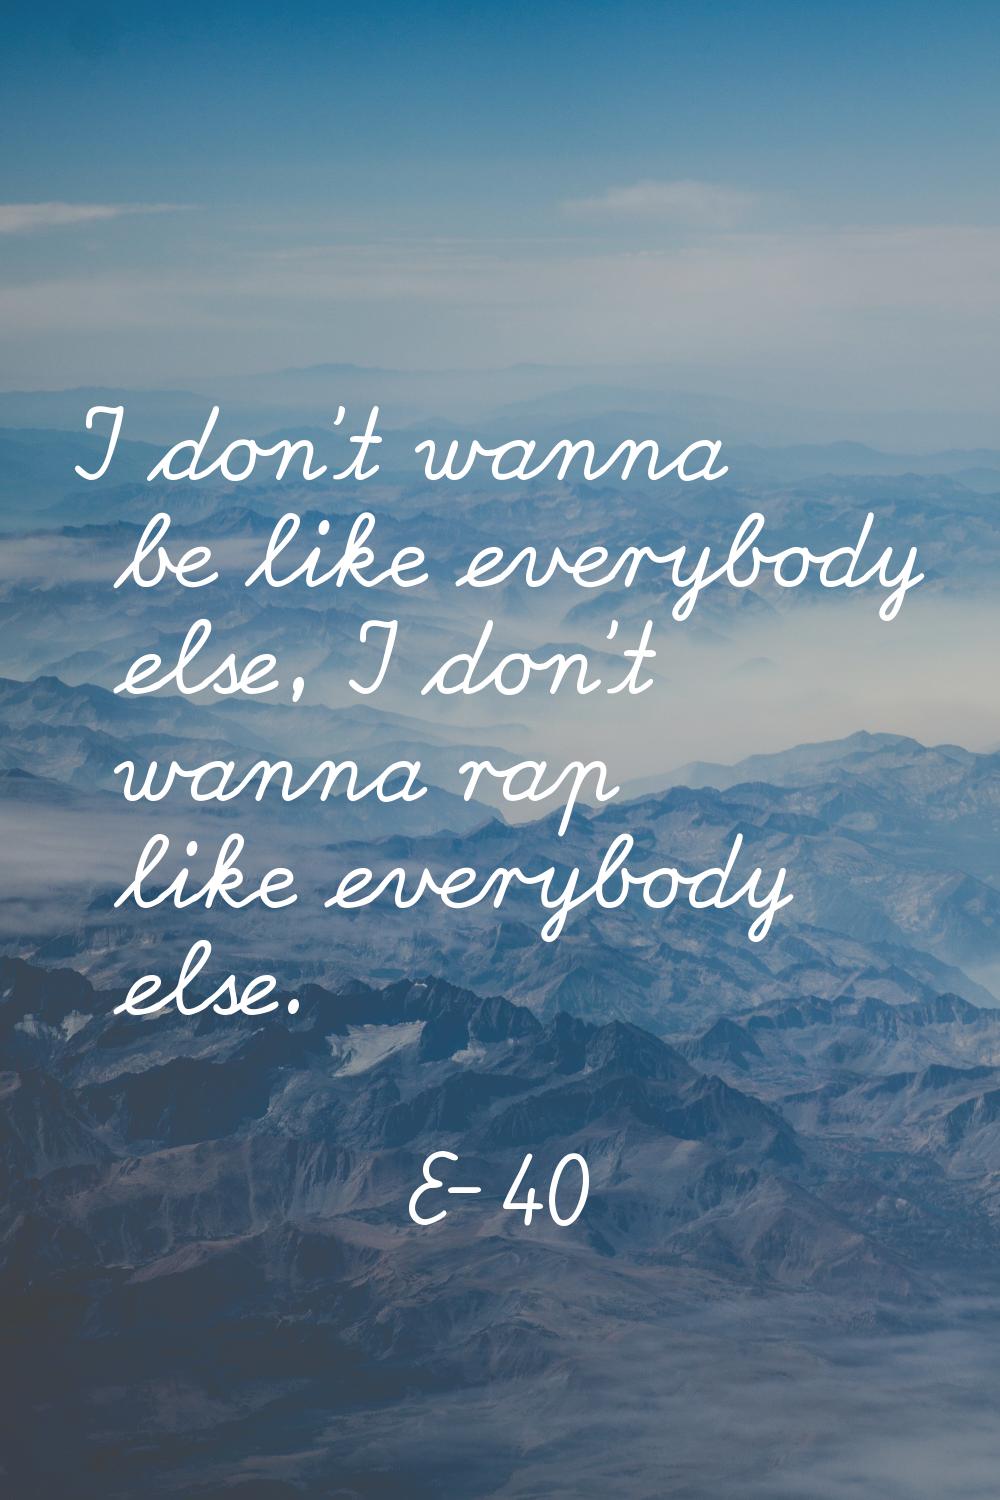 I don't wanna be like everybody else, I don't wanna rap like everybody else.